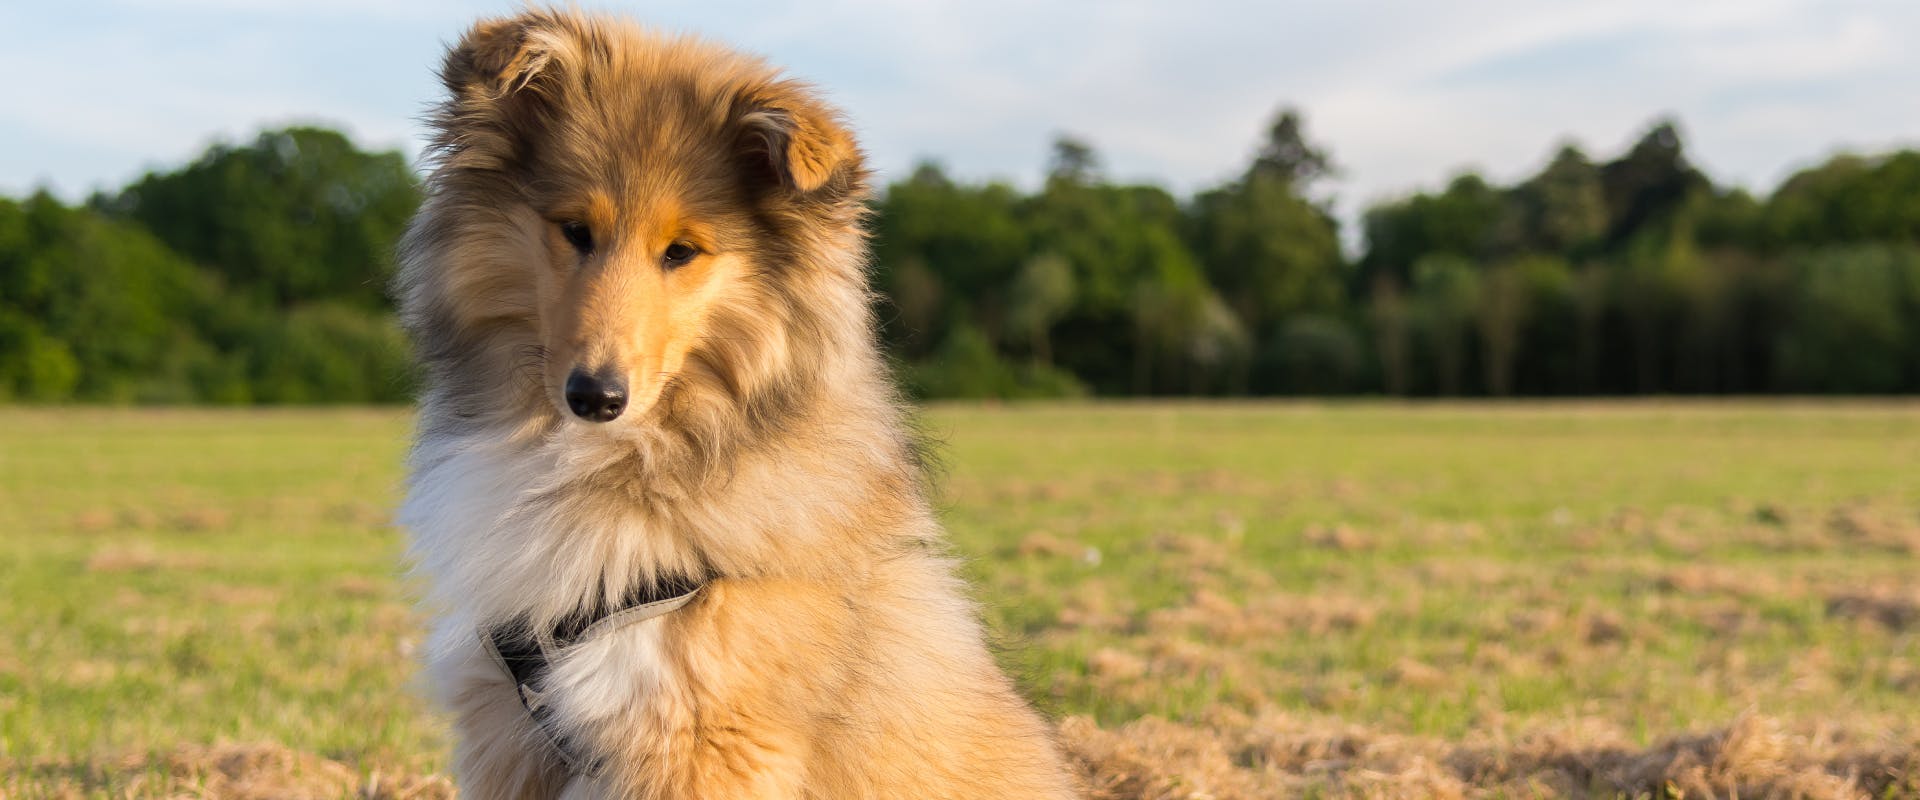 a rough collie puppy sitting in a grassy field